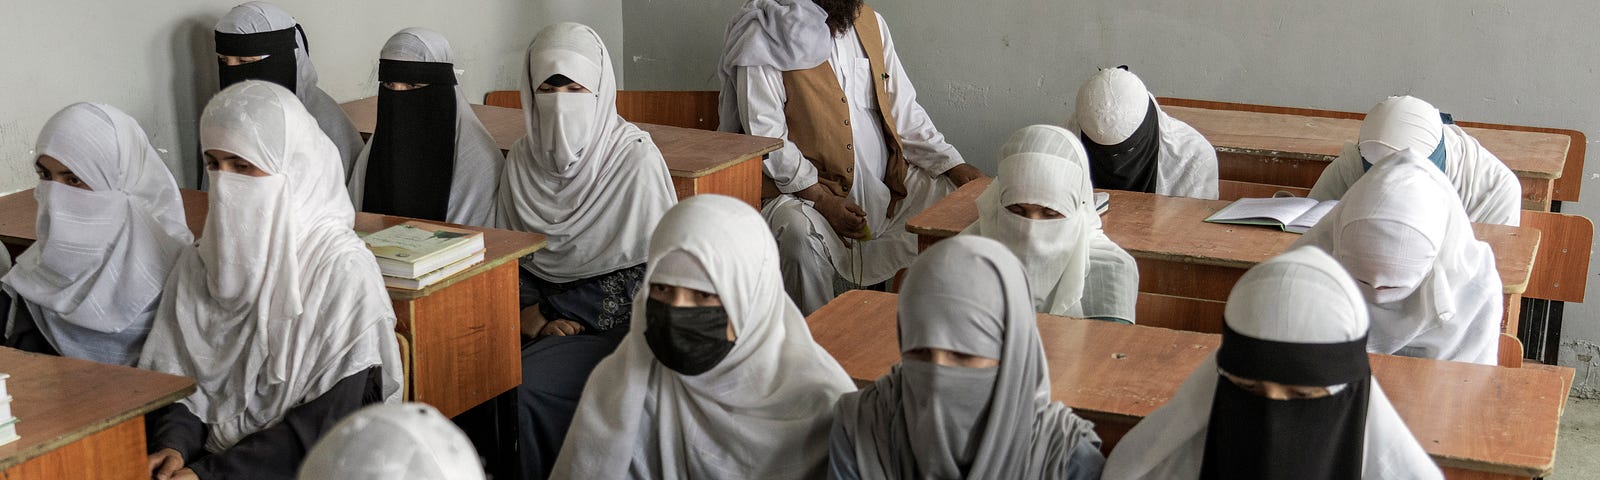 Credit: https://apnews.com/article/afghanistan-taliban-high-school-ban-girls-7046b3dbb76ca76d40343db6ba547556